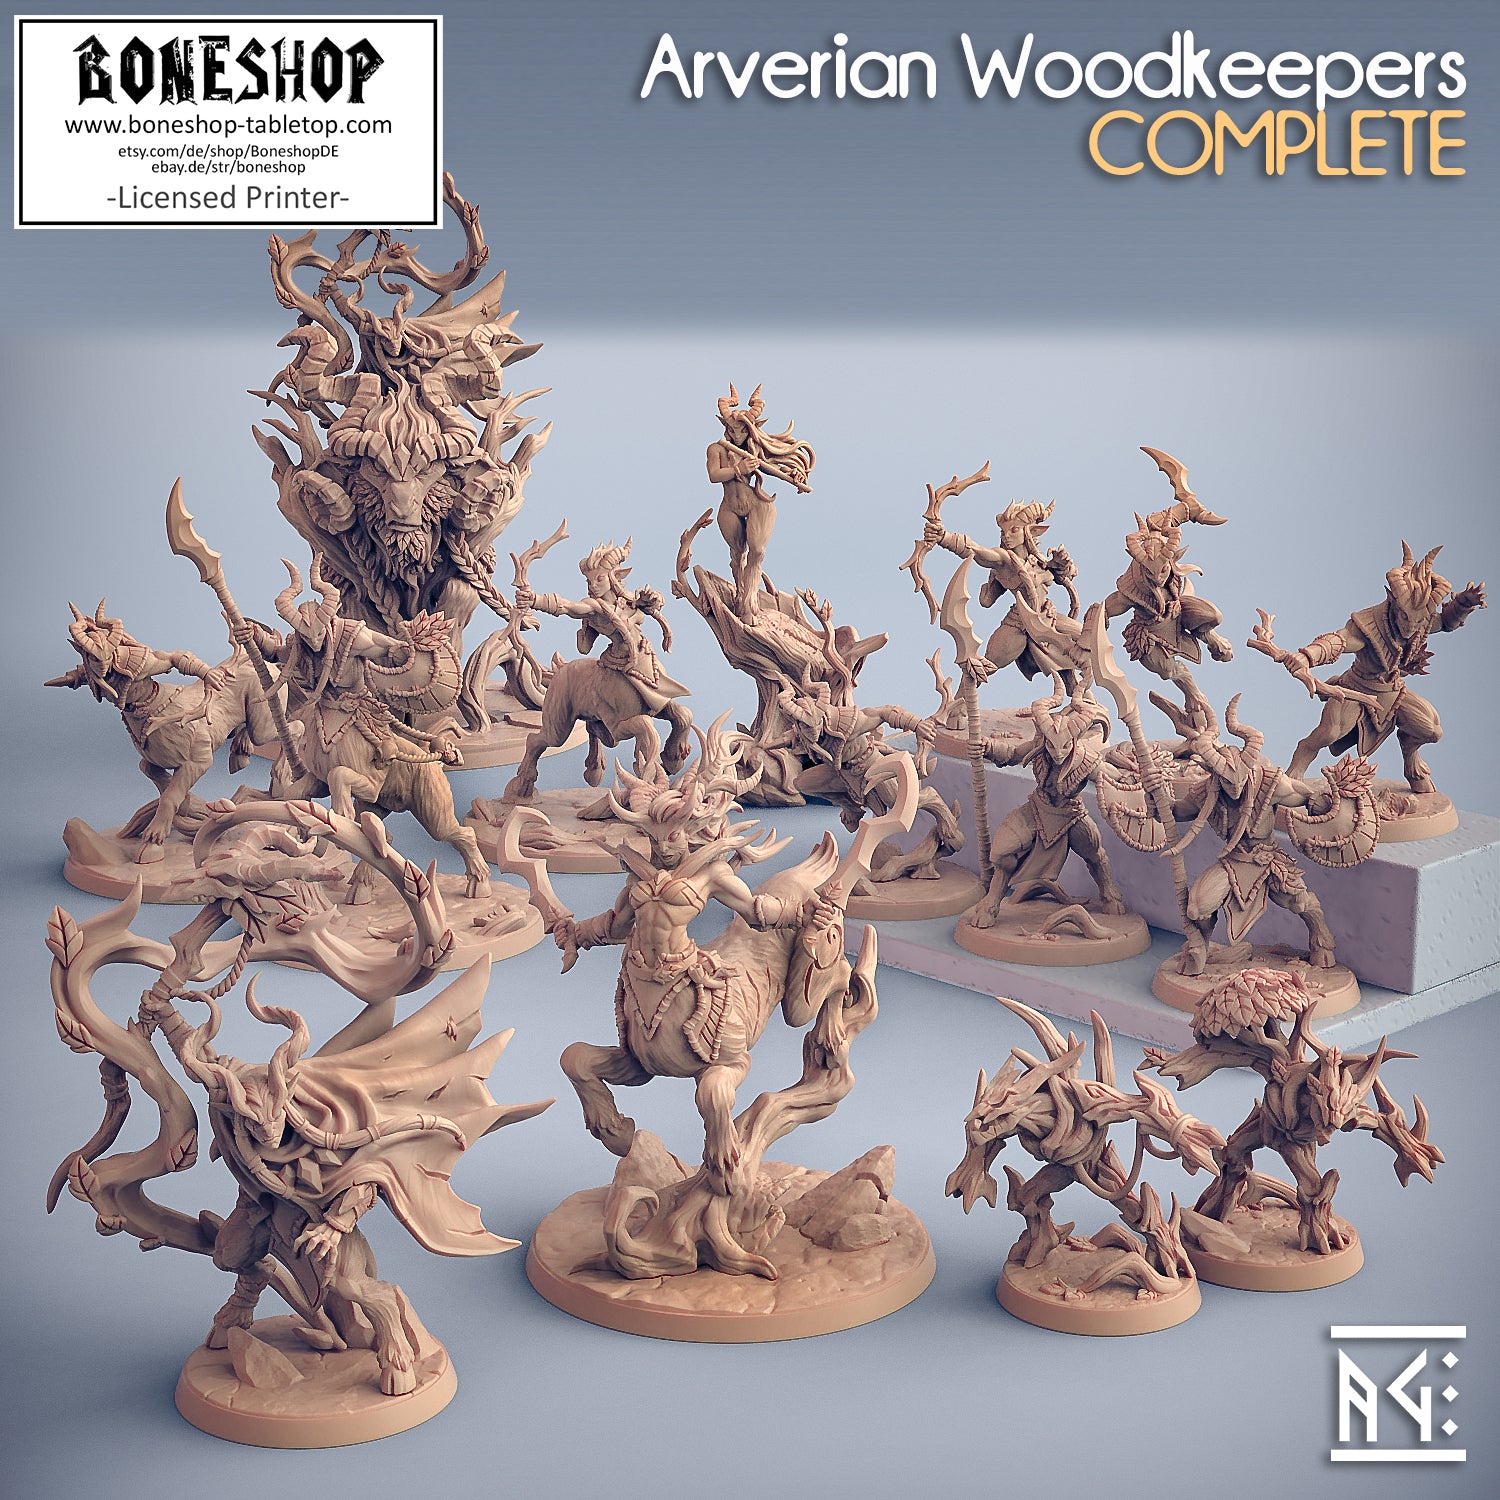 Arverian Woodkeepers